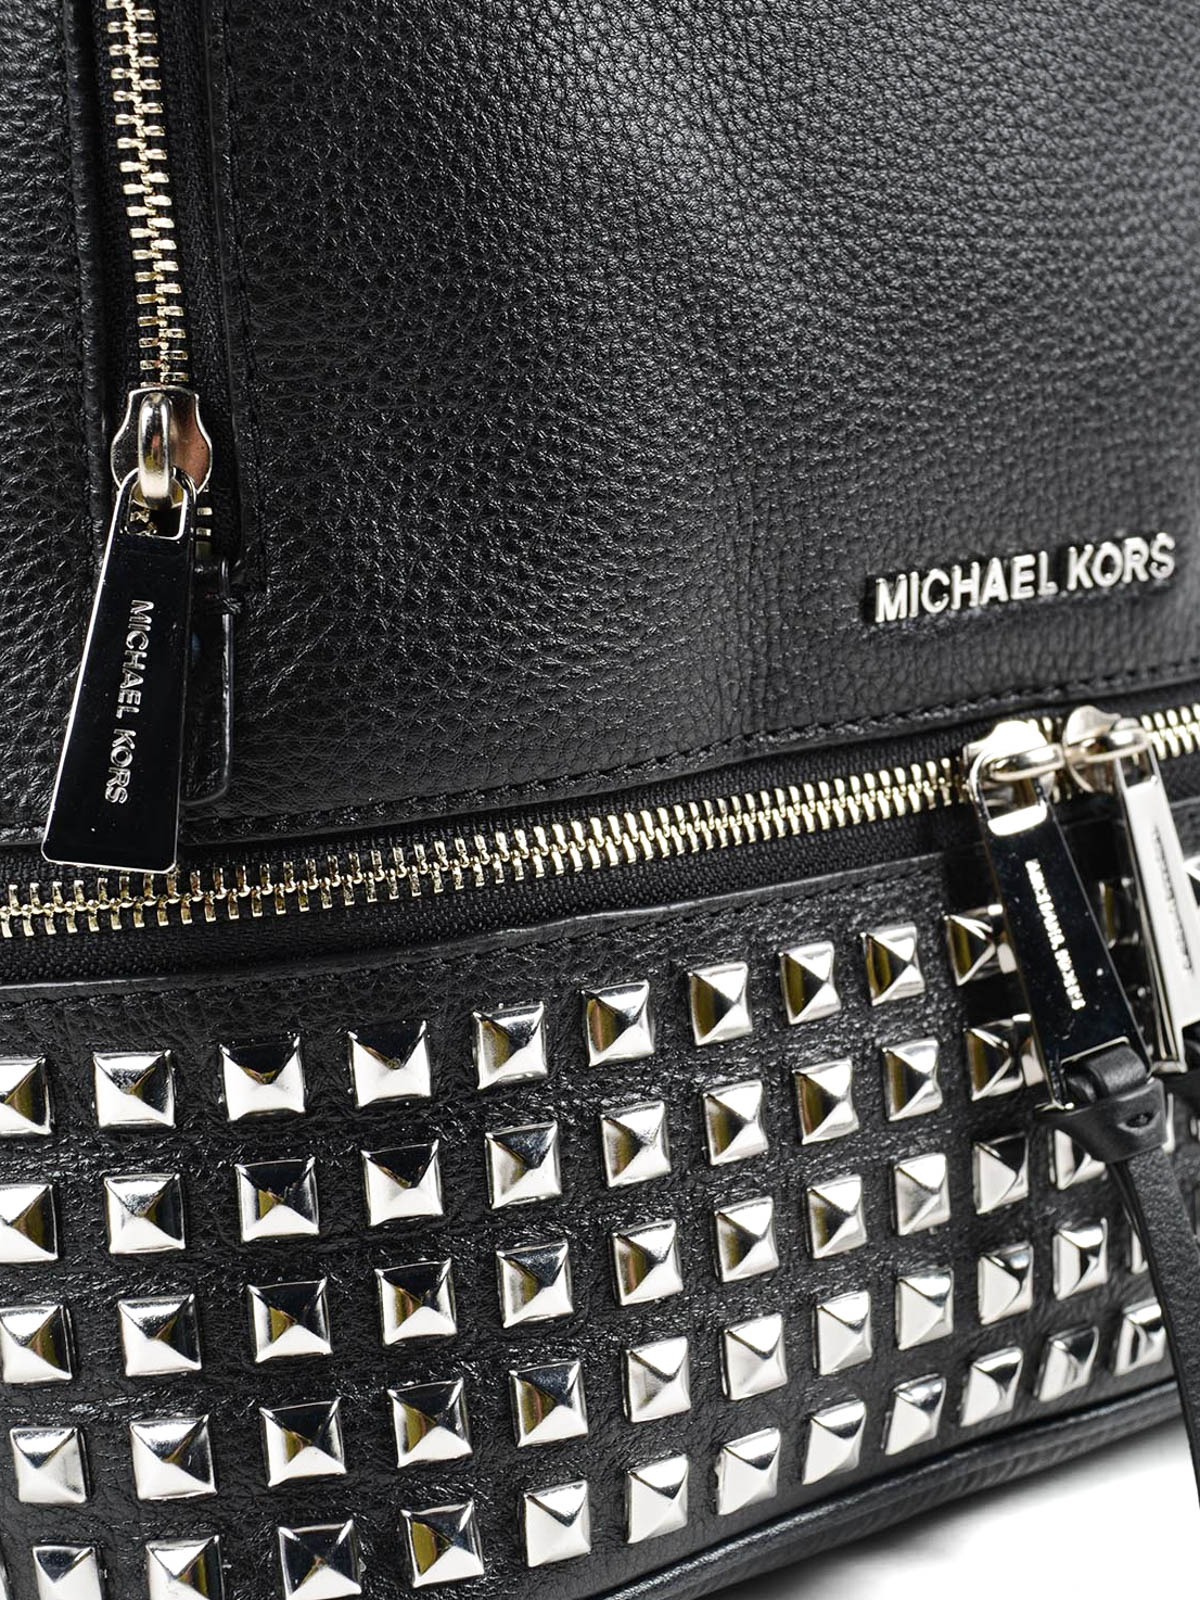 Michael Kors Rhea Zip Small Leather Backpack - Black